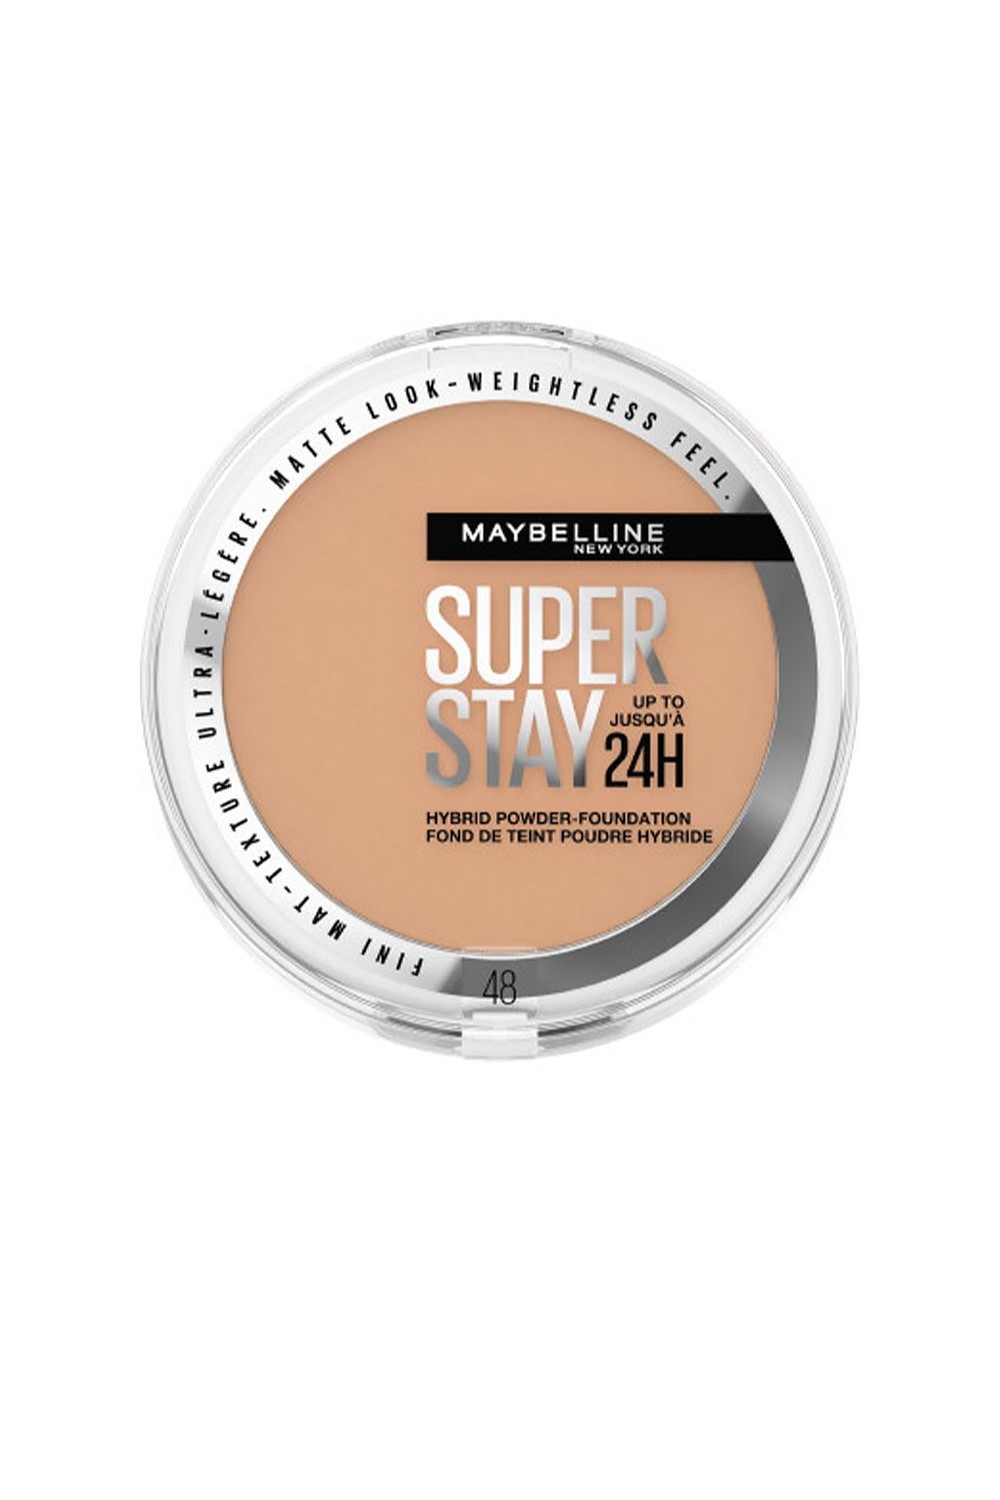 Maybelline Superstay 24h Hybrid Powder-Foundation 48 9g